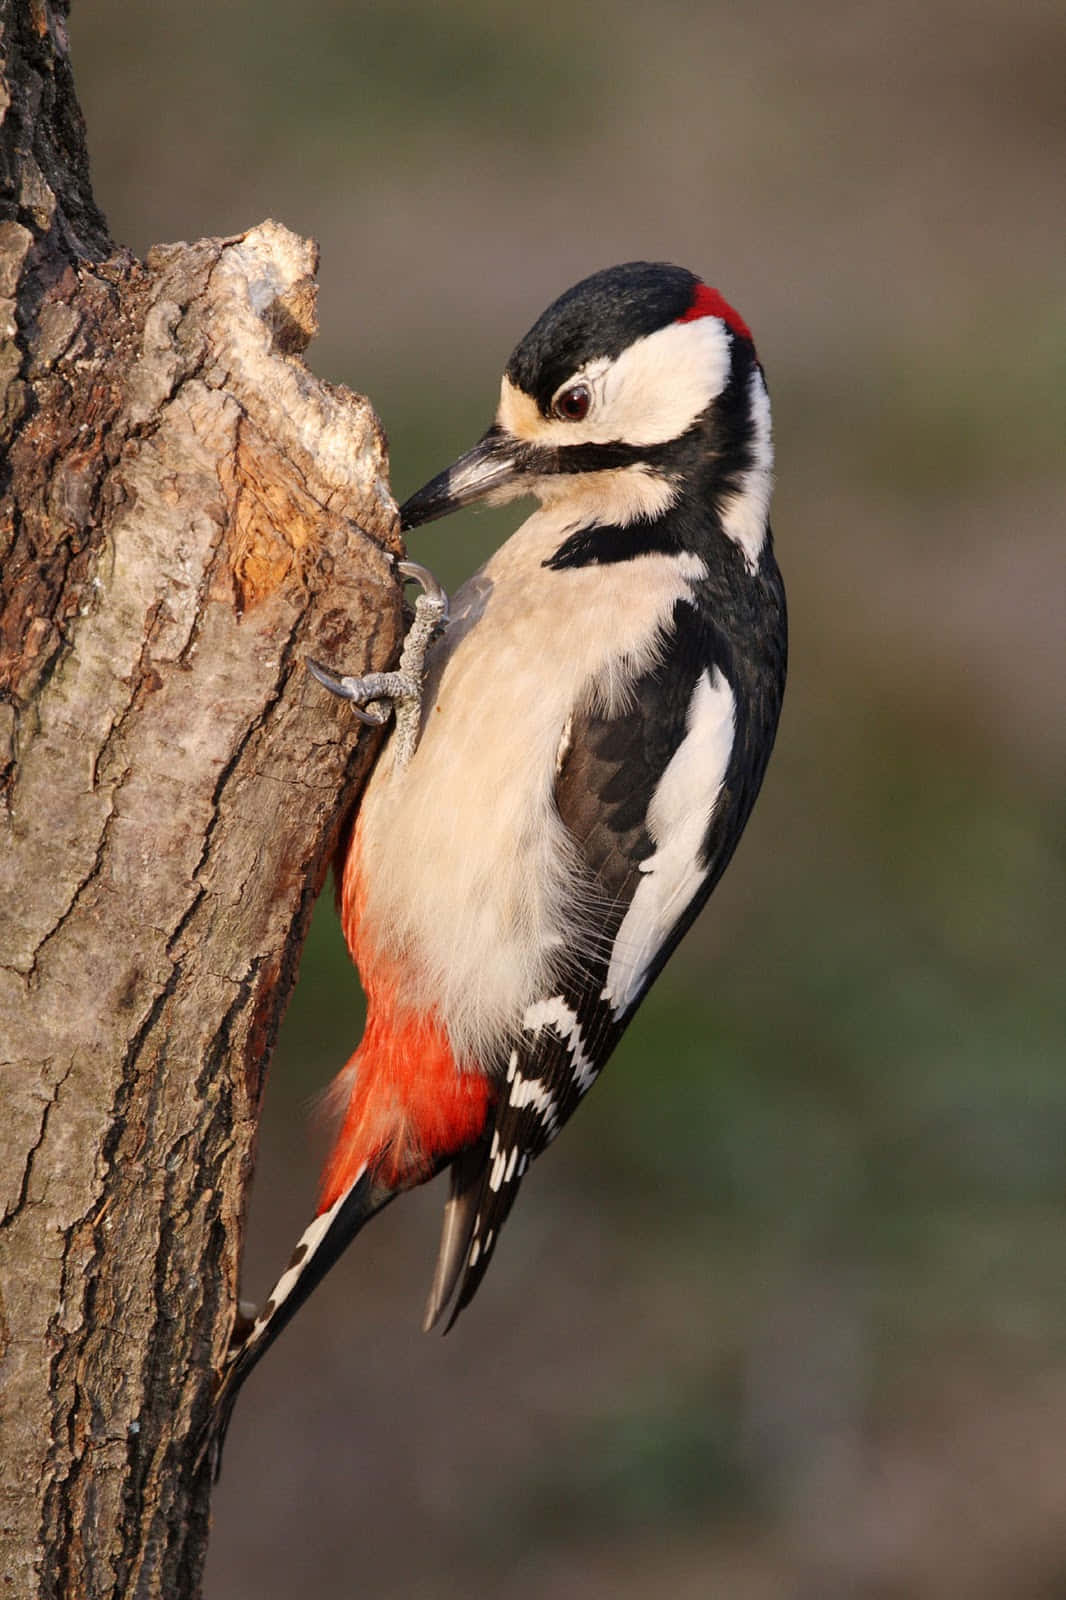 A Woodpecker in its Natural Habitat